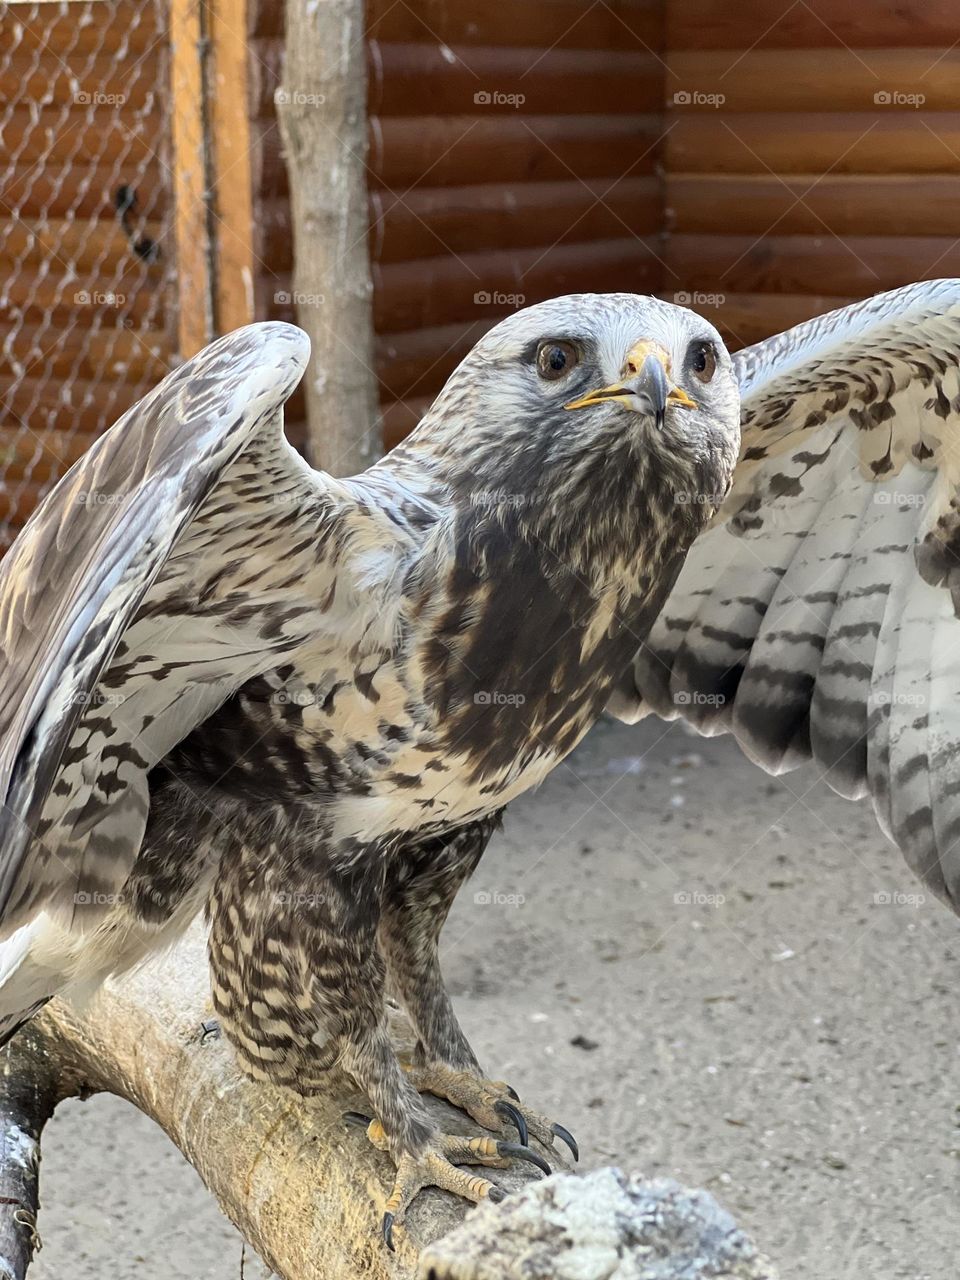 Regal Soar: Magnificent Eagle in Captivity